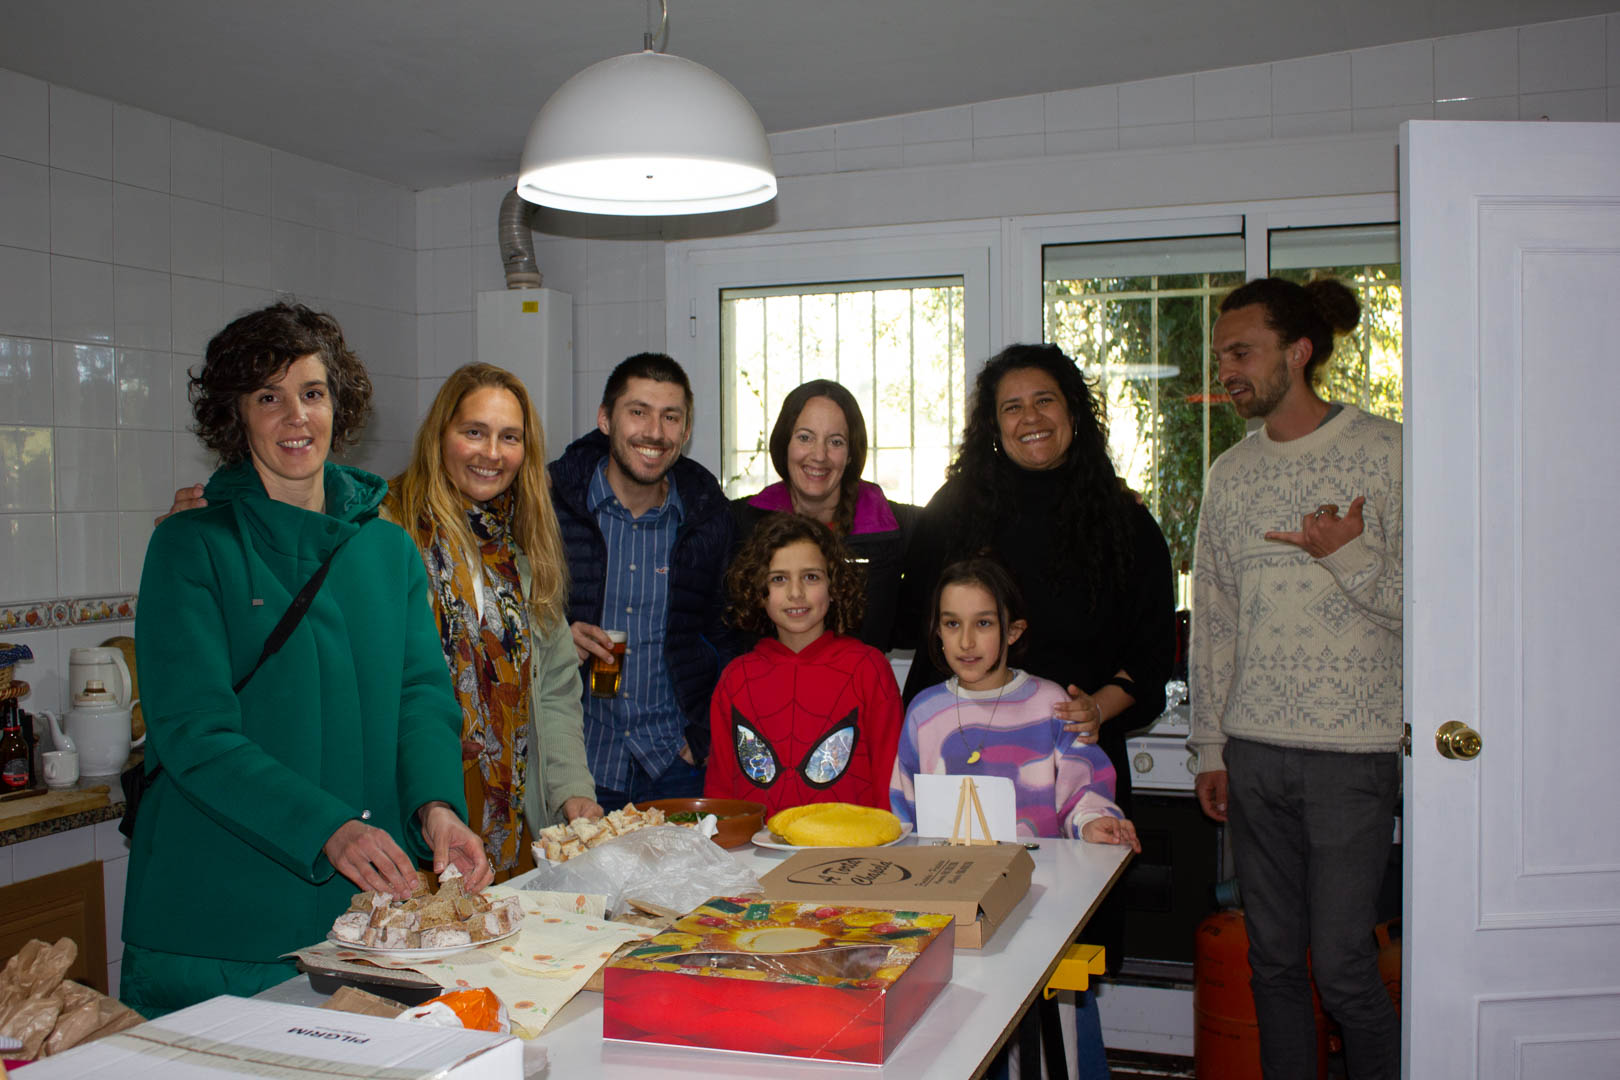 'Entre Culturas' Event - People preparing food at Casa do pobo